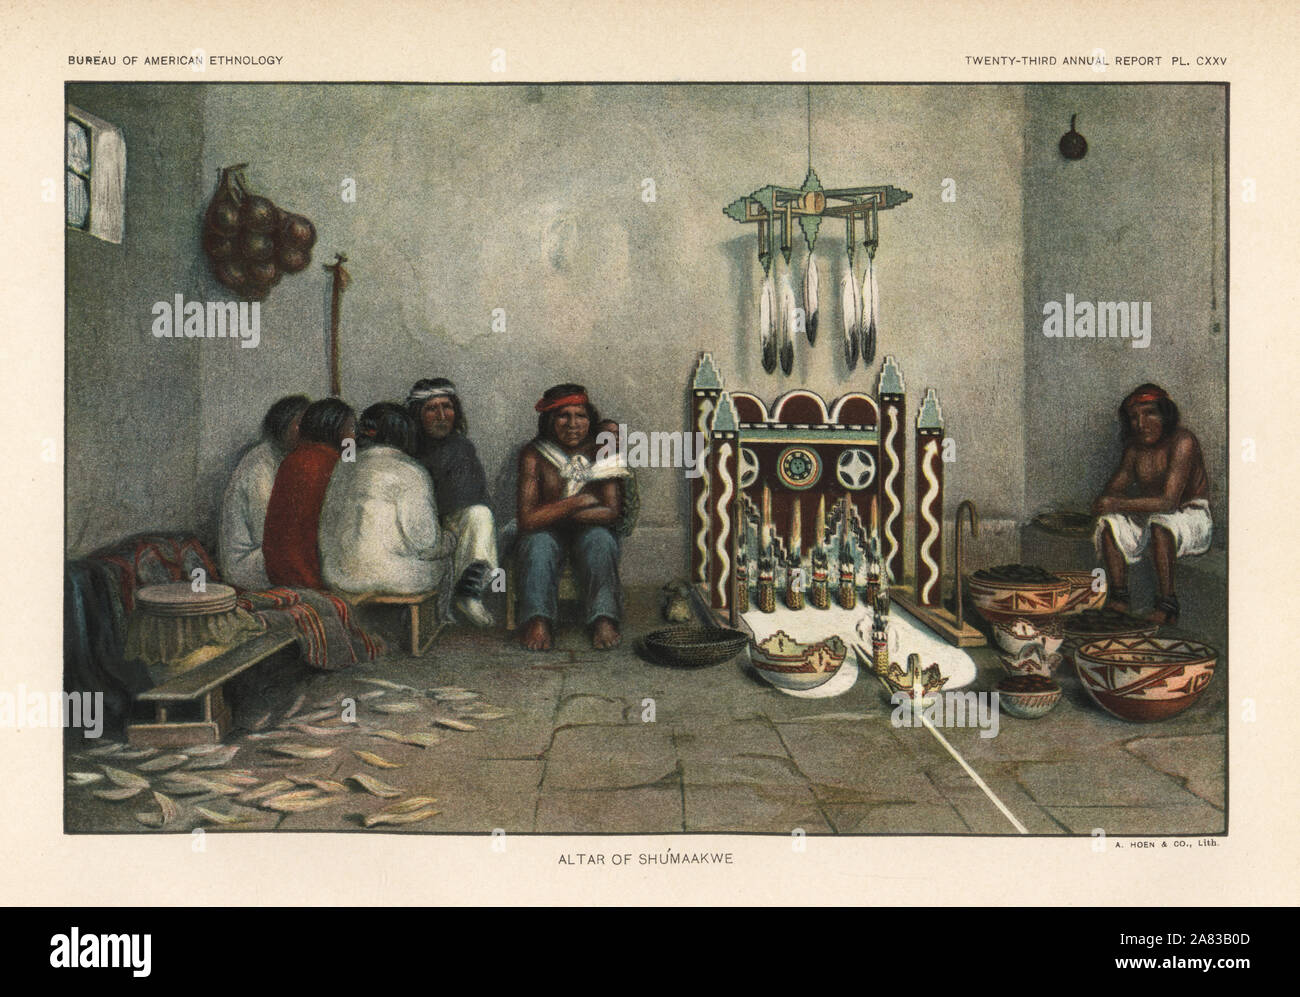 Altare di Shu'maakwe, Zuni nazione. Chromolithograph da agosto Hoen da John Wesley Powell la XXIII relazione annuale del Bureau of American etnologia, Washington, 1904. Foto Stock